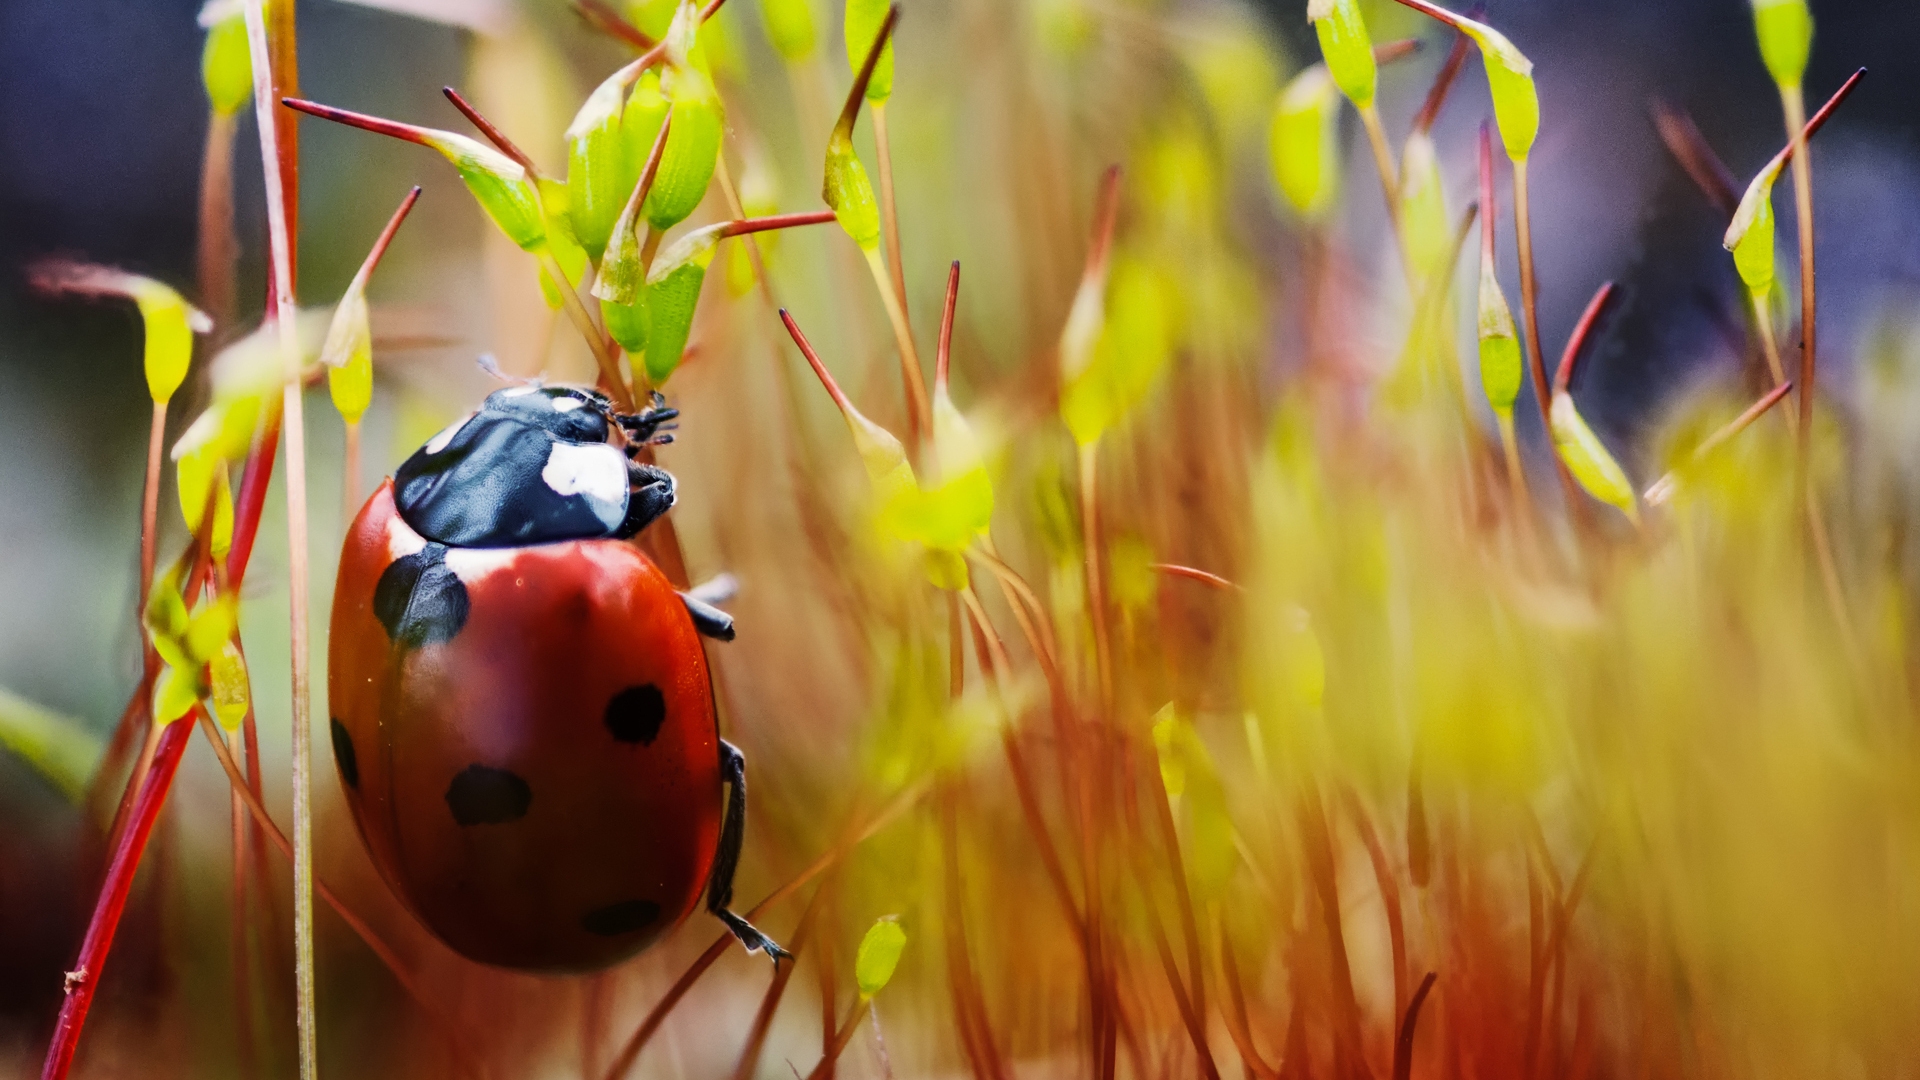 Red Ladybug Macro Photo for 1920 x 1080 HDTV 1080p resolution